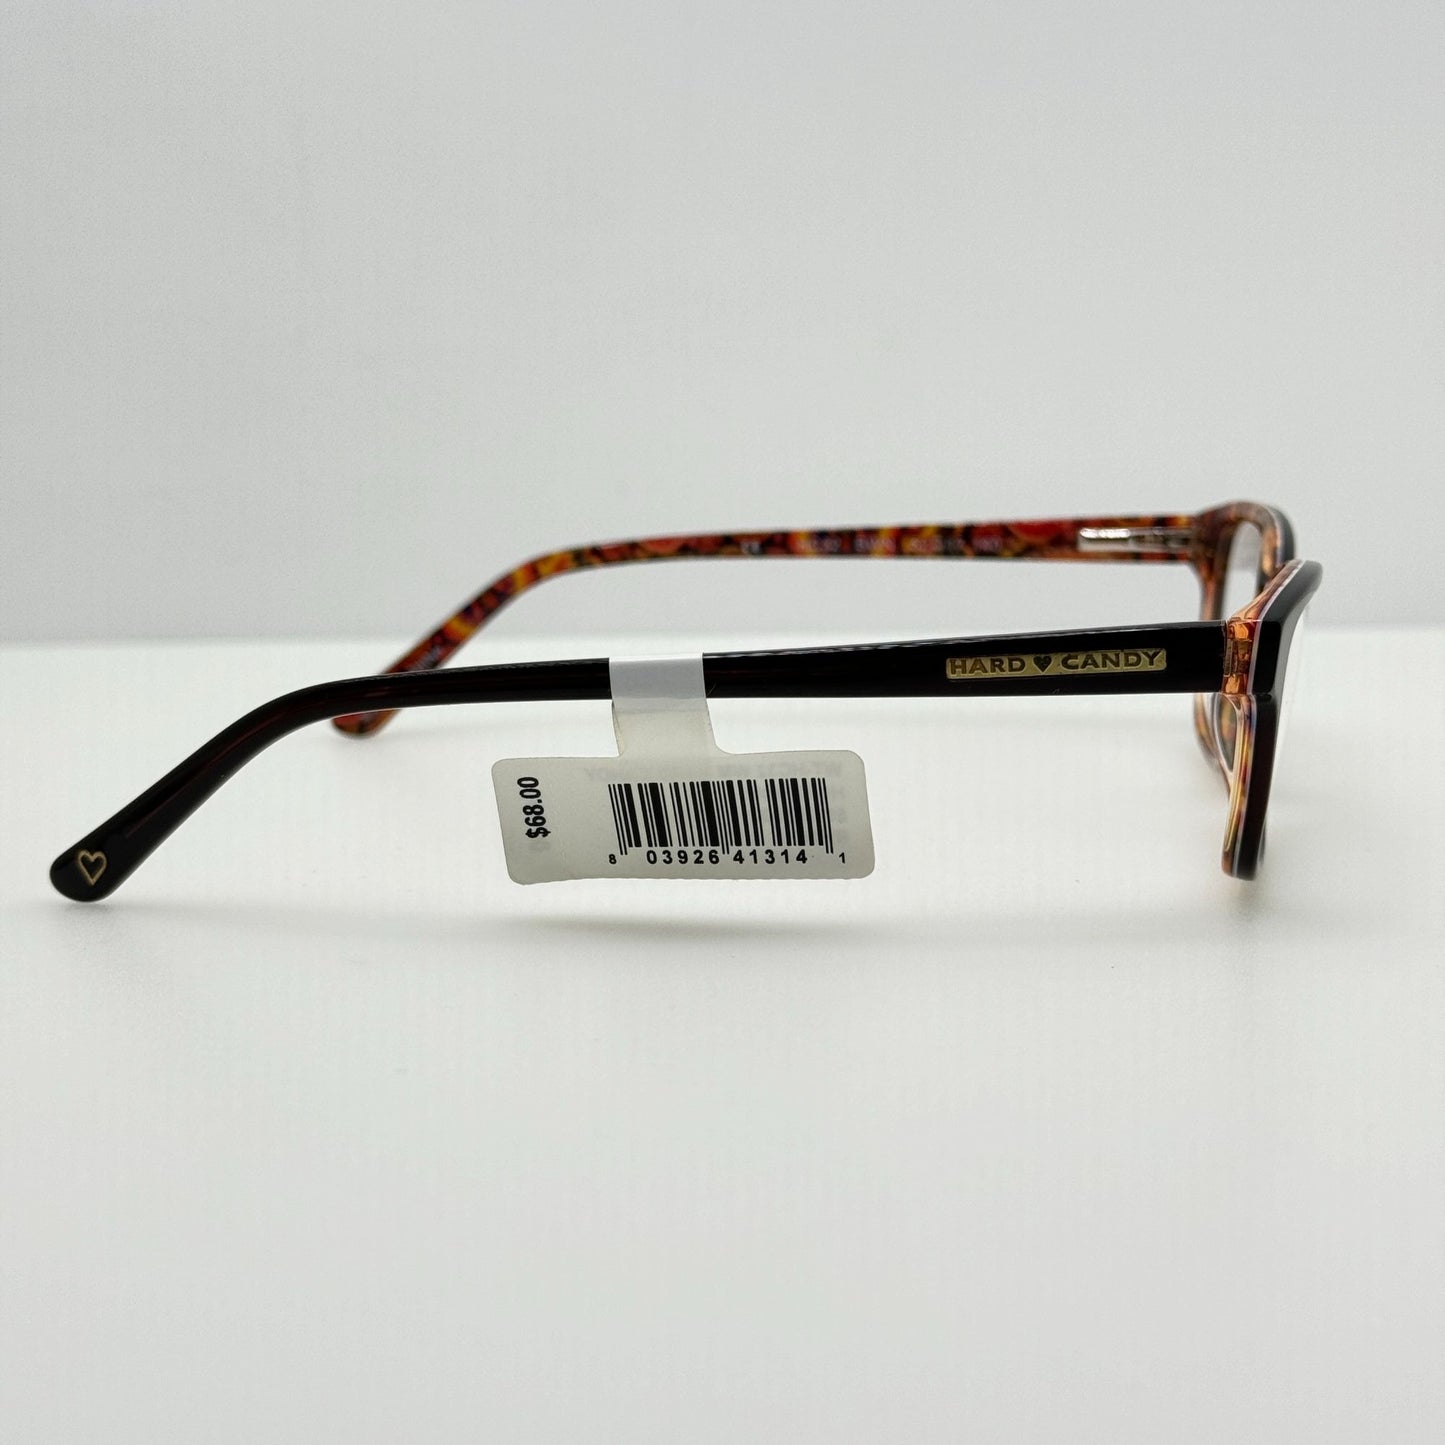 Hard Candy Eyeglasses Eye Glasses Frames HC32 BWN 52-17-140